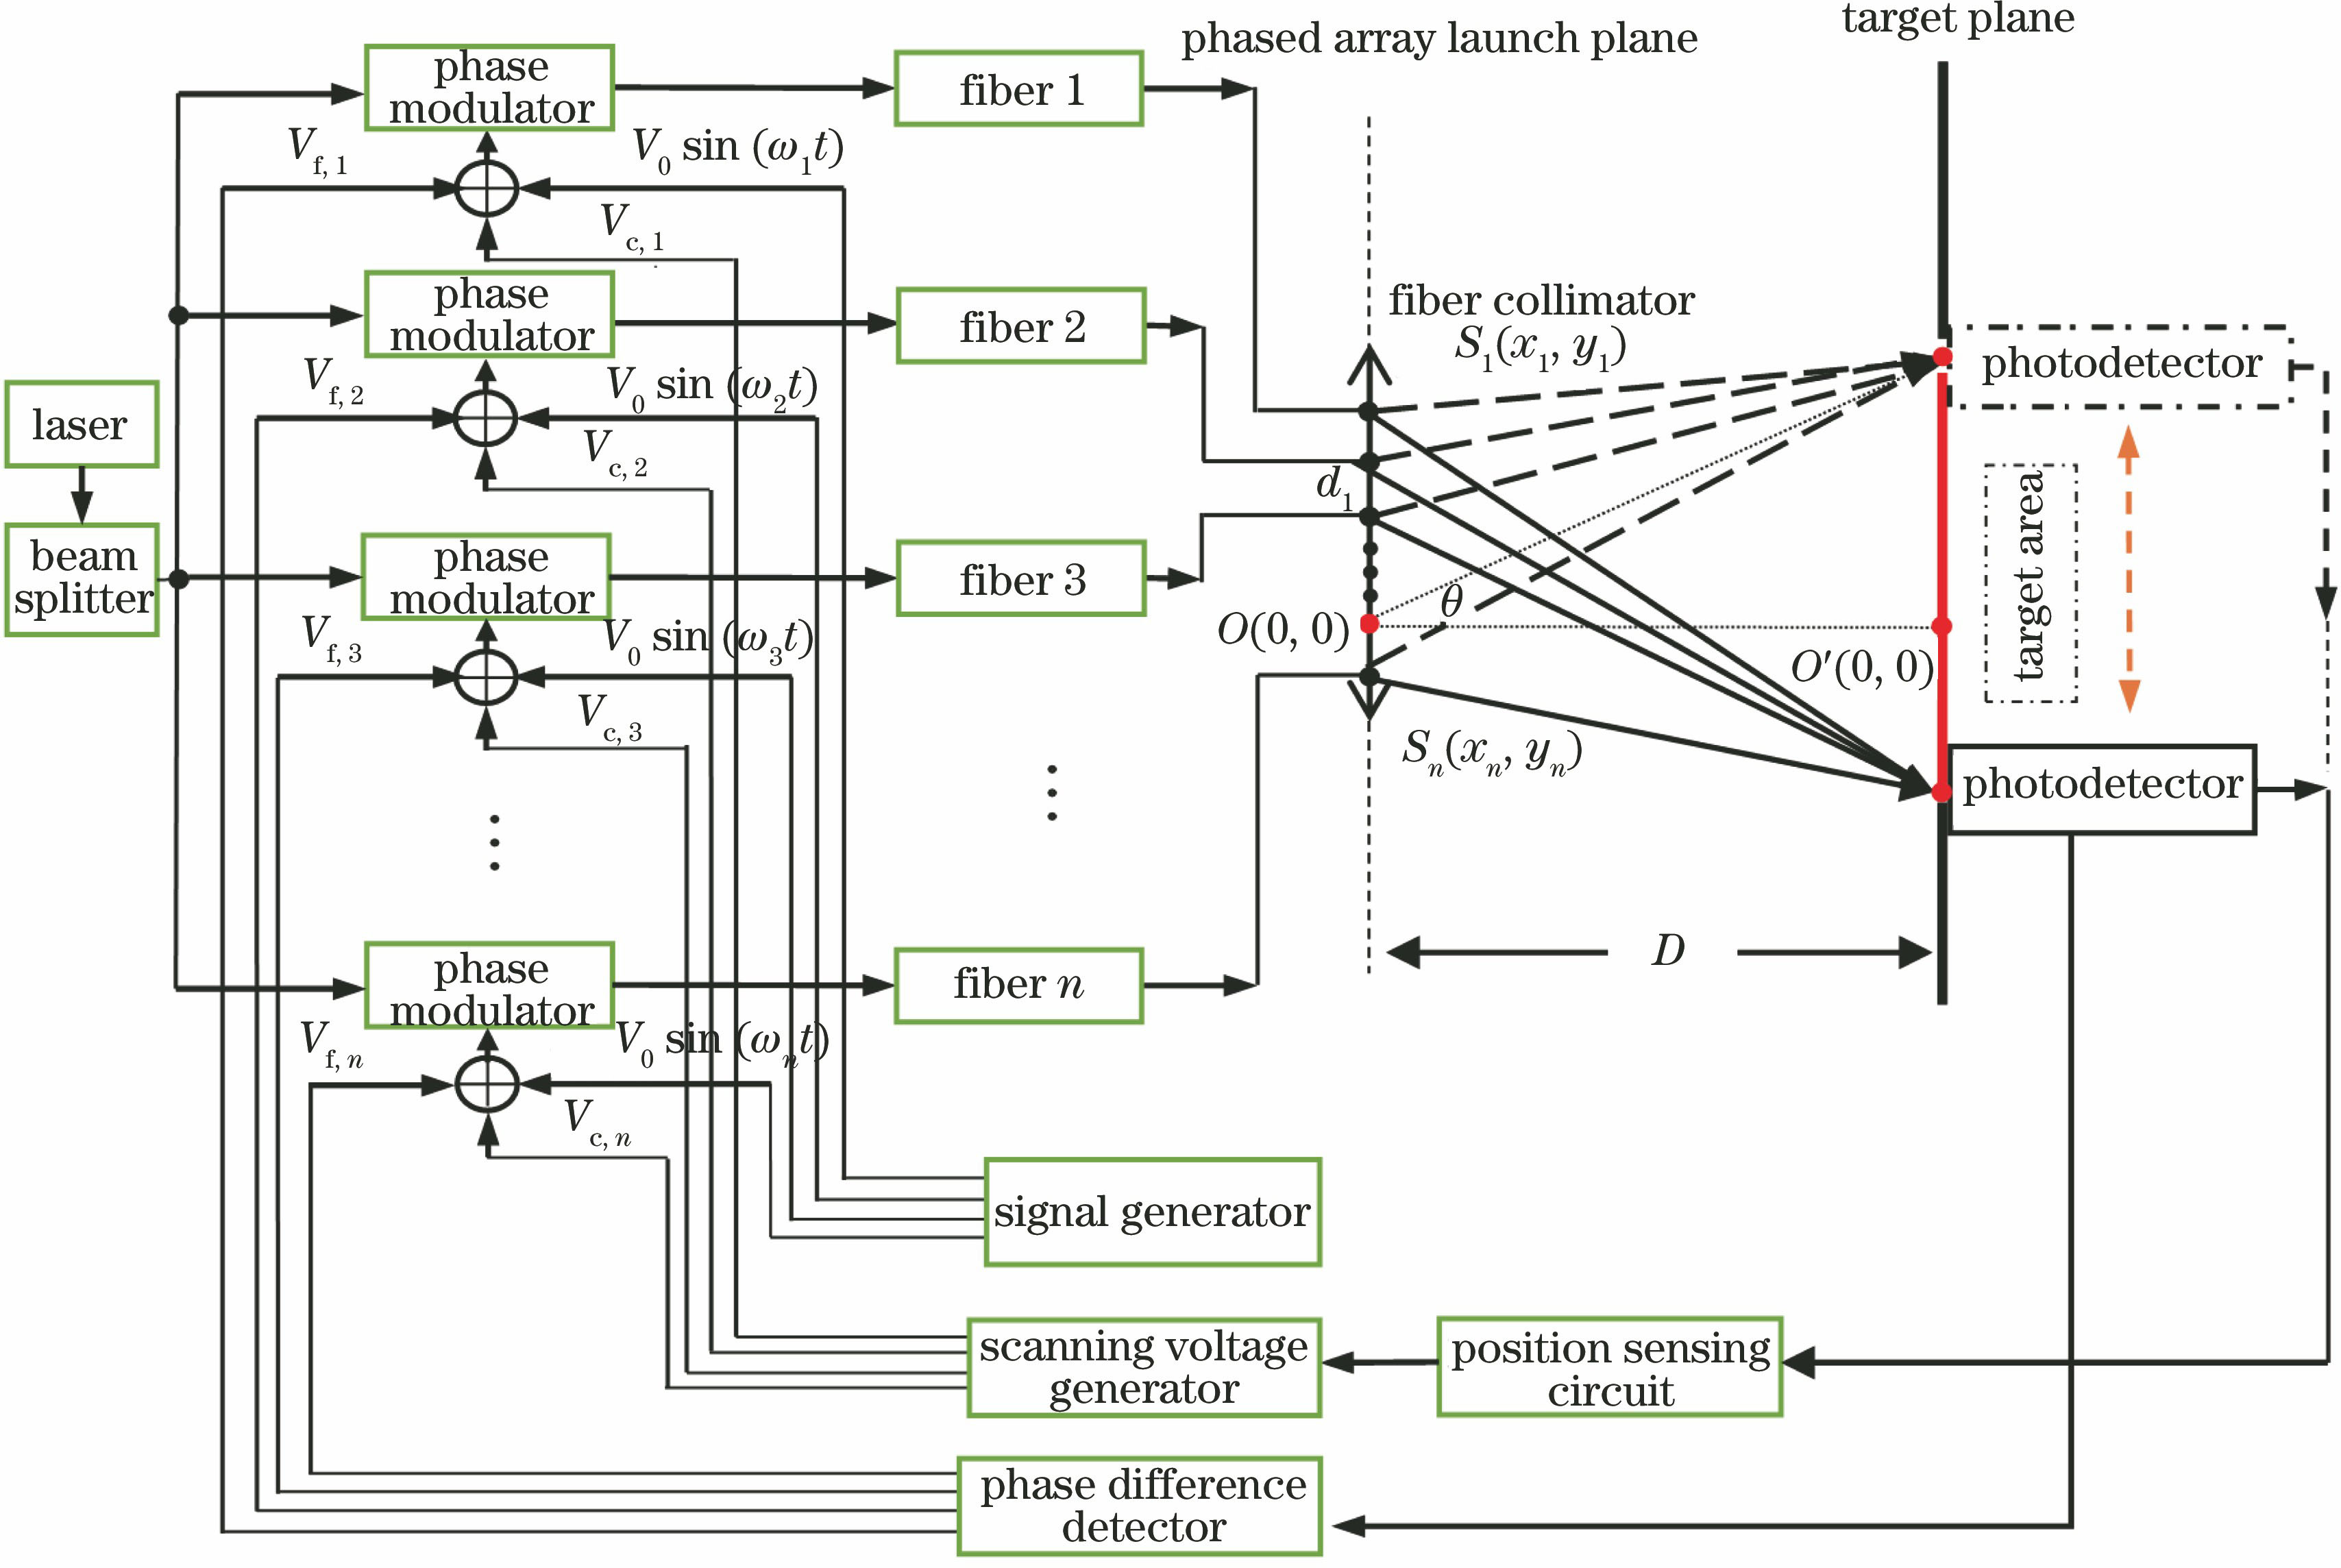 Scanning control schematic of N-beam fiber-optic interferometric phased array